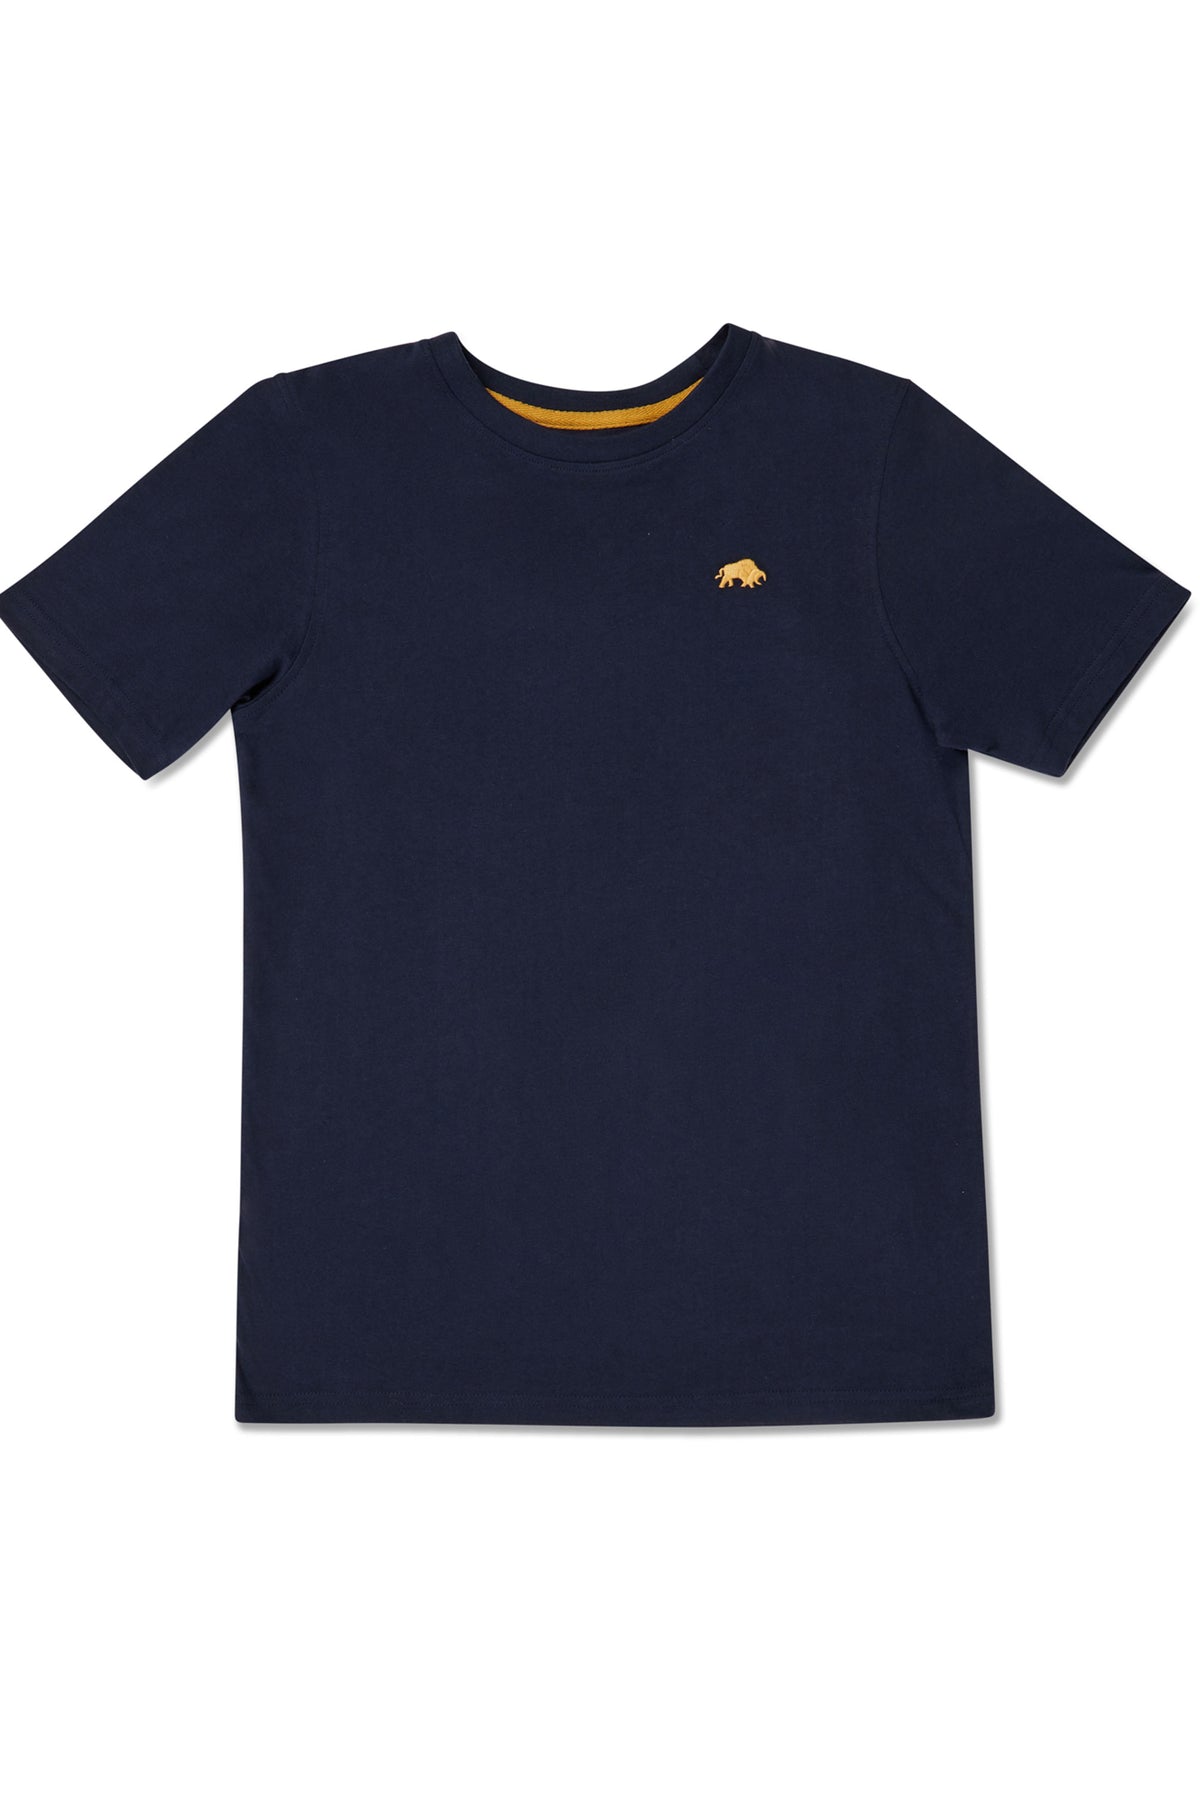 Signature T-Shirt - Navy